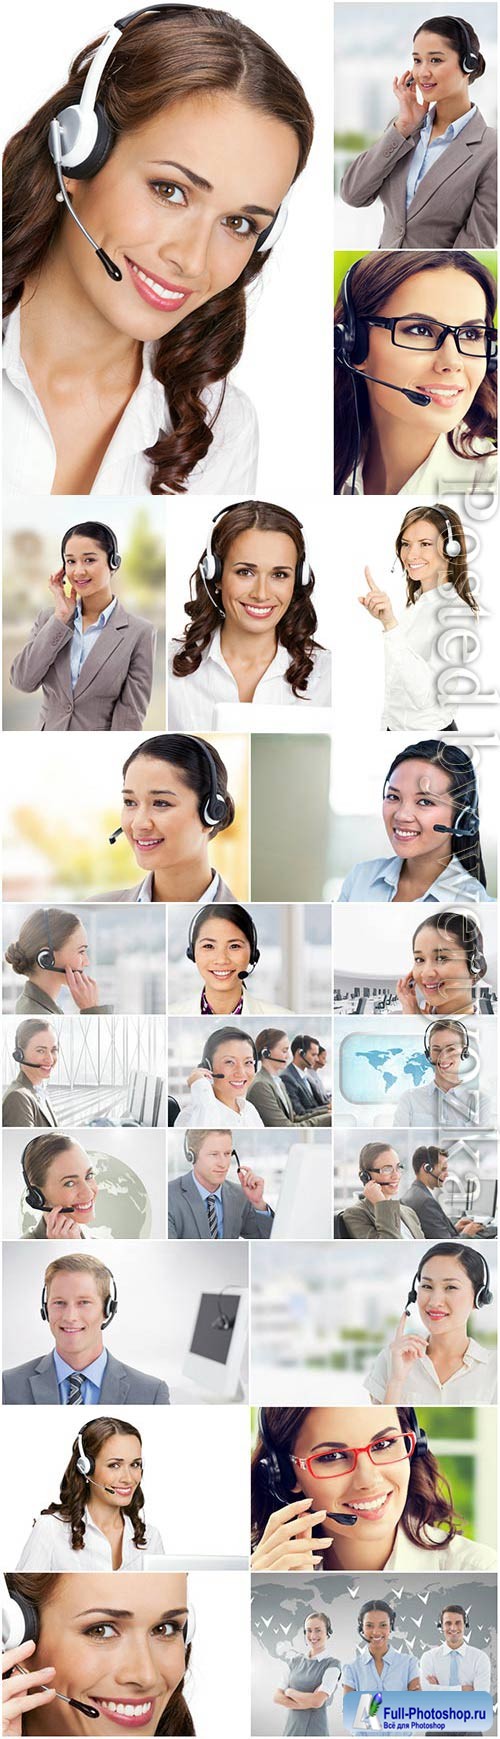 Smiling female operators stock photo